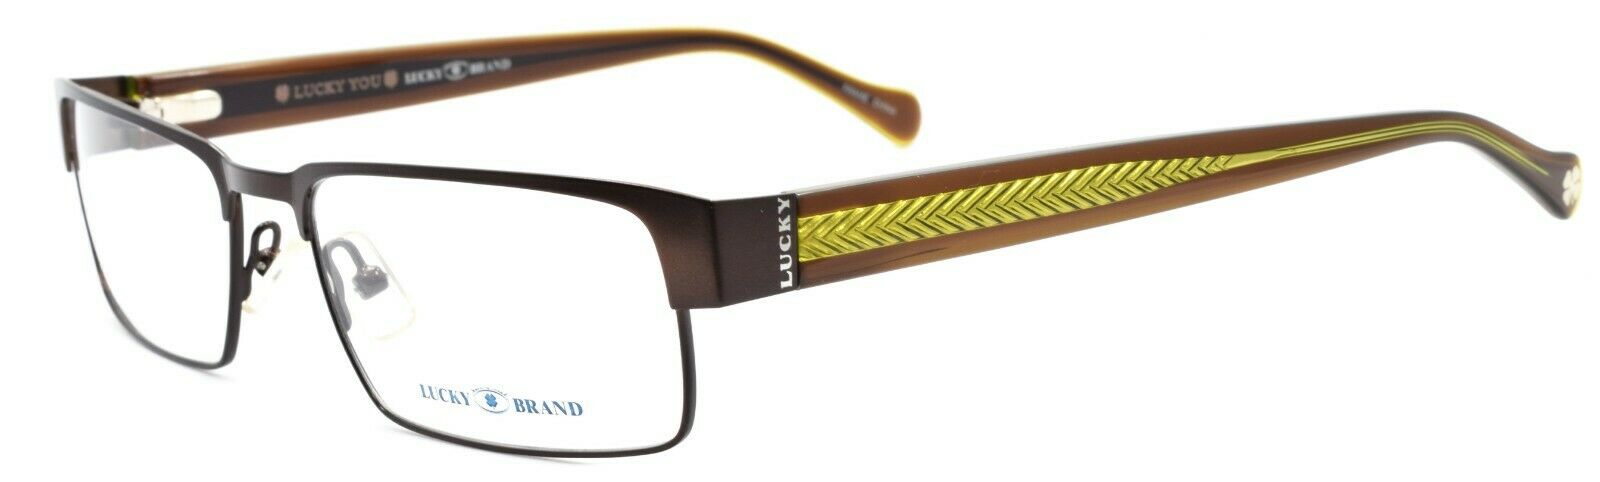 1-LUCKY BRAND Vista Men's Eyeglasses Frames 54-17-140 Brown + CASE-751286229400-IKSpecs